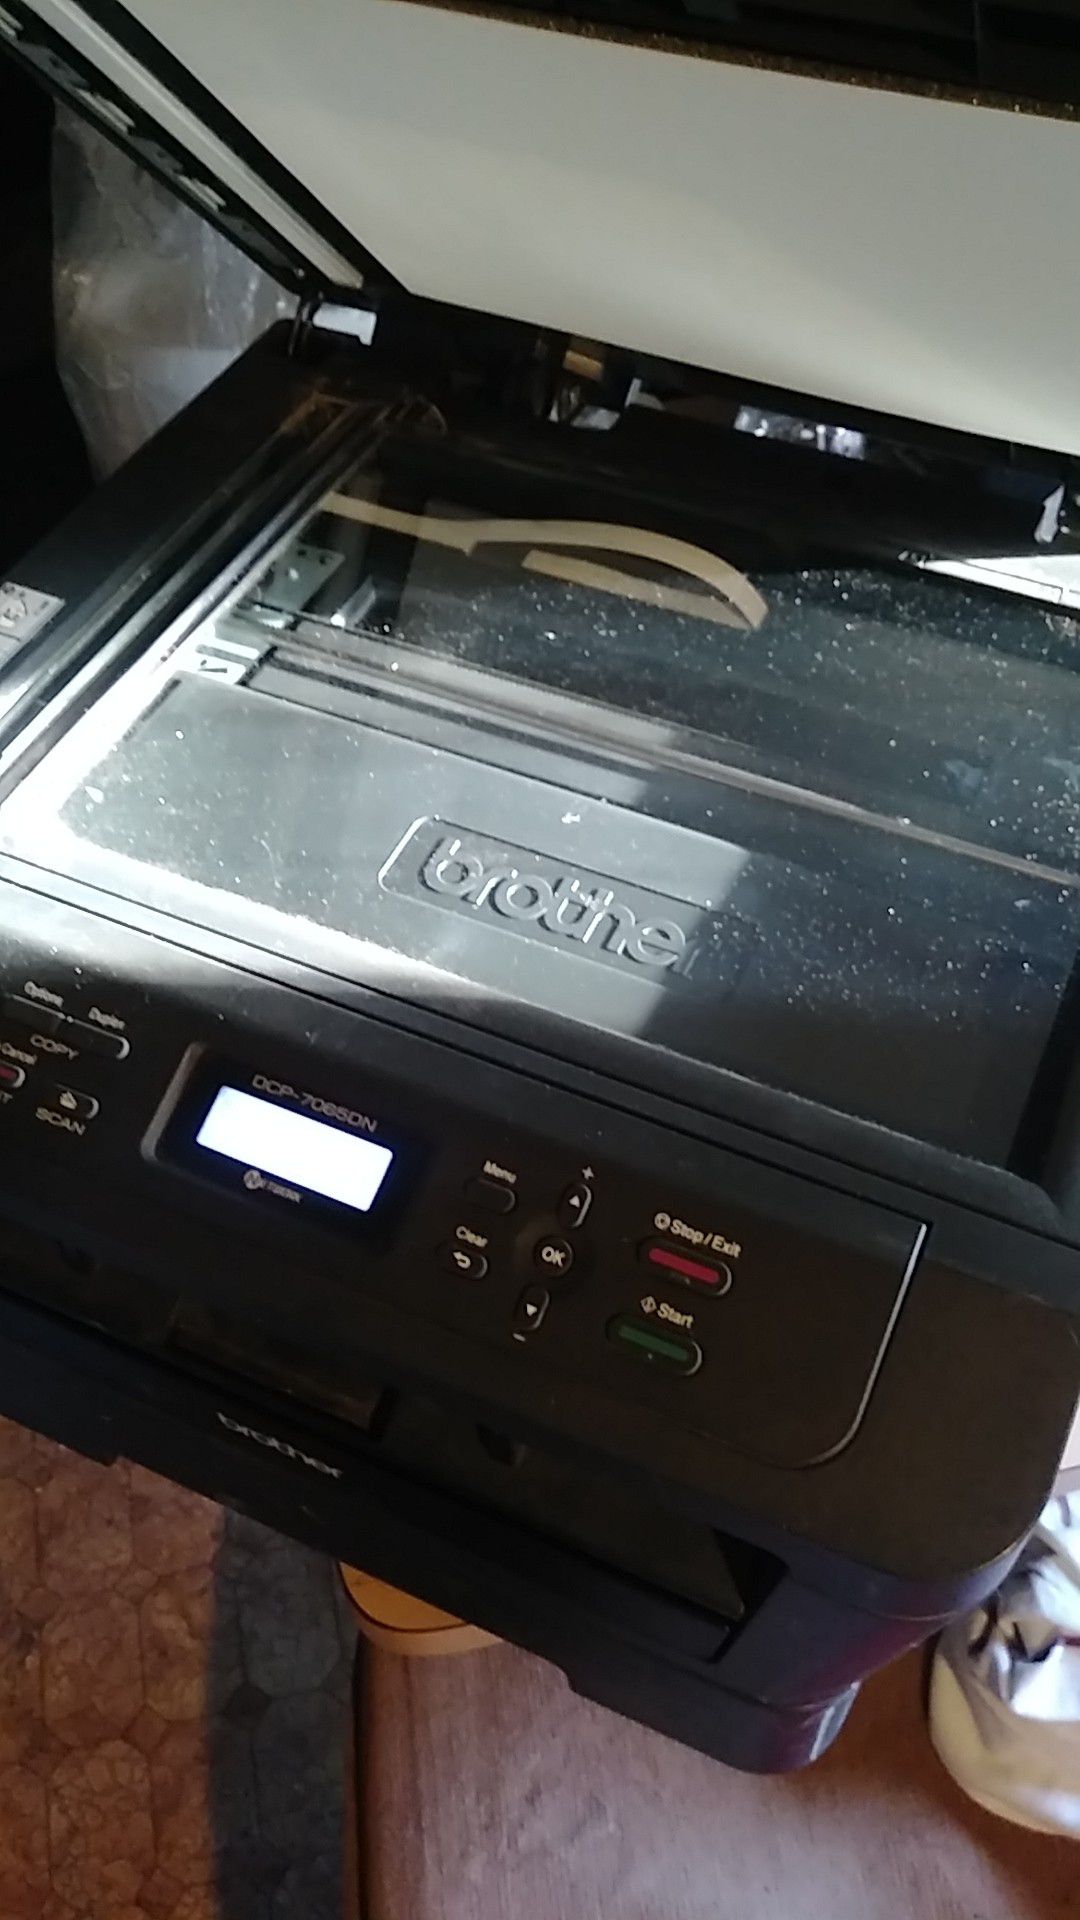 Brother laser copy/printer machine